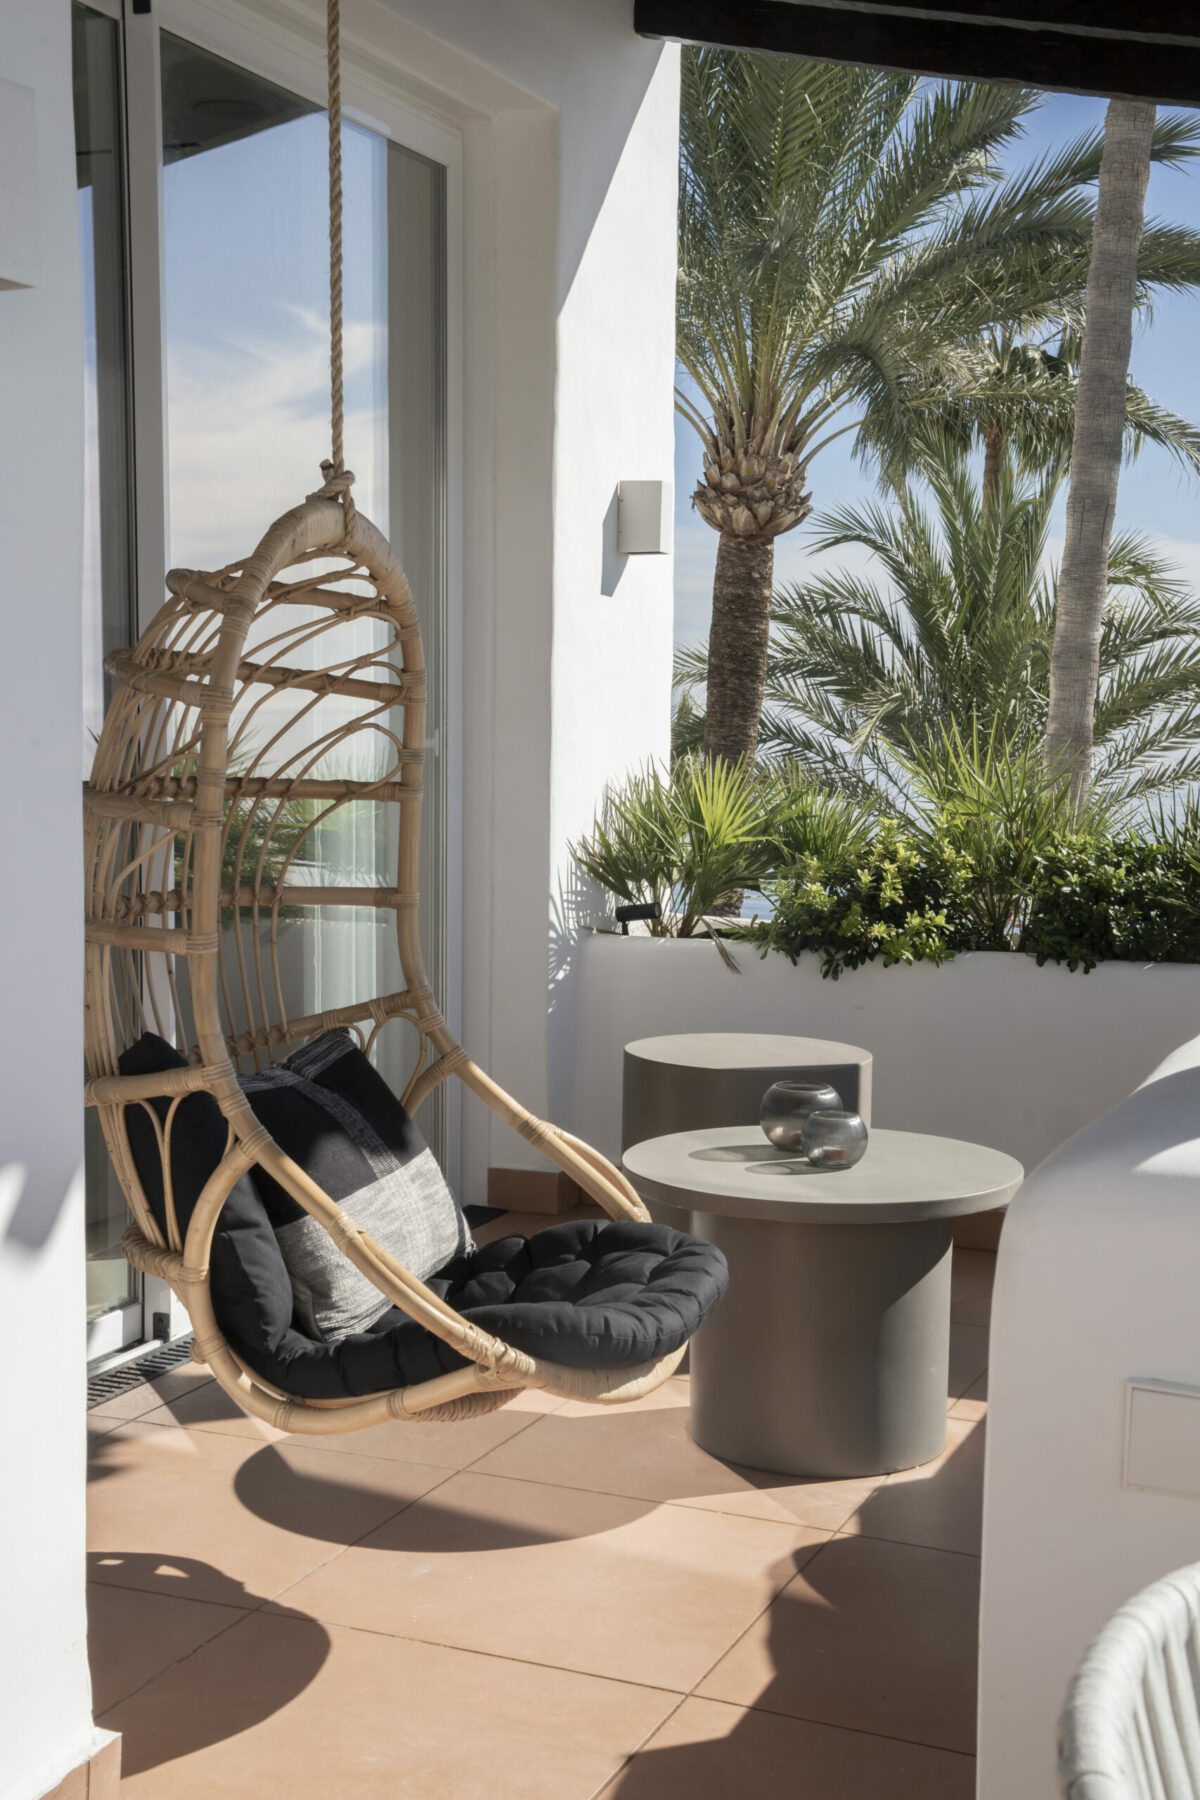 frontline beach penthouse for sale estepona marbella